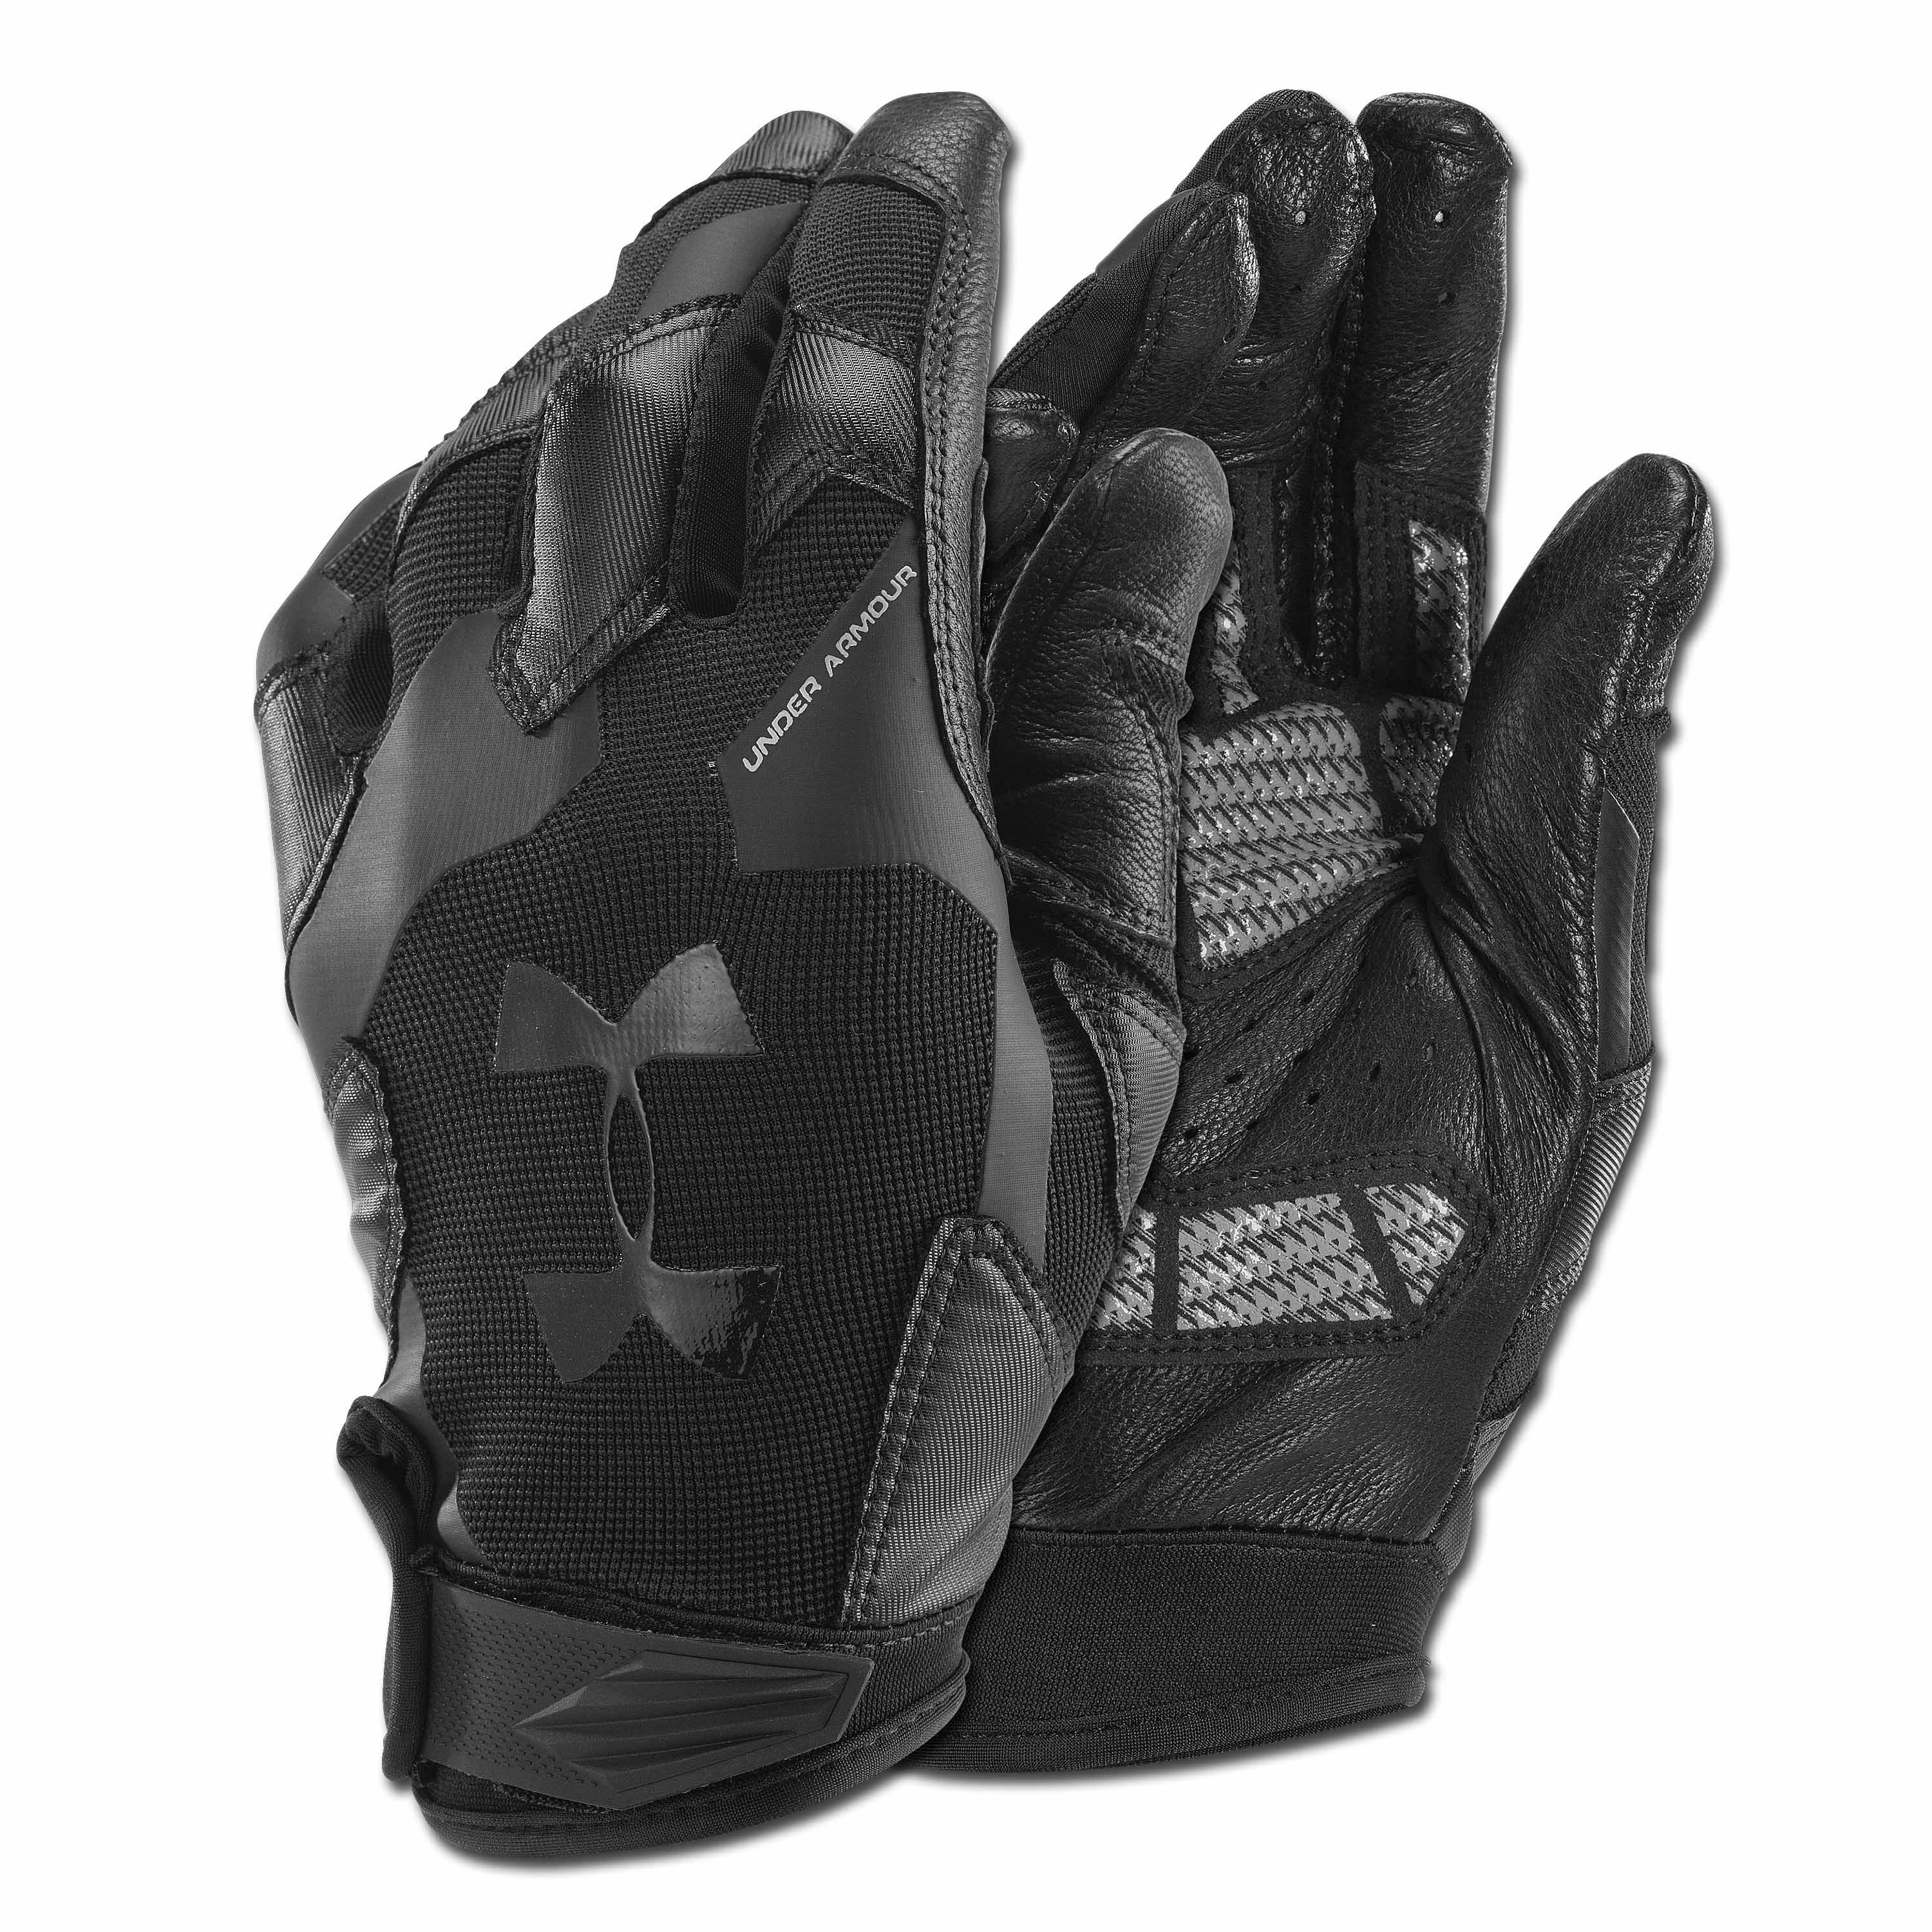 Apt Elementair biografie Under Armour Renegade Glove black | Under Armour Renegade Glove black |  Gloves | Gloves | Men | Clothing